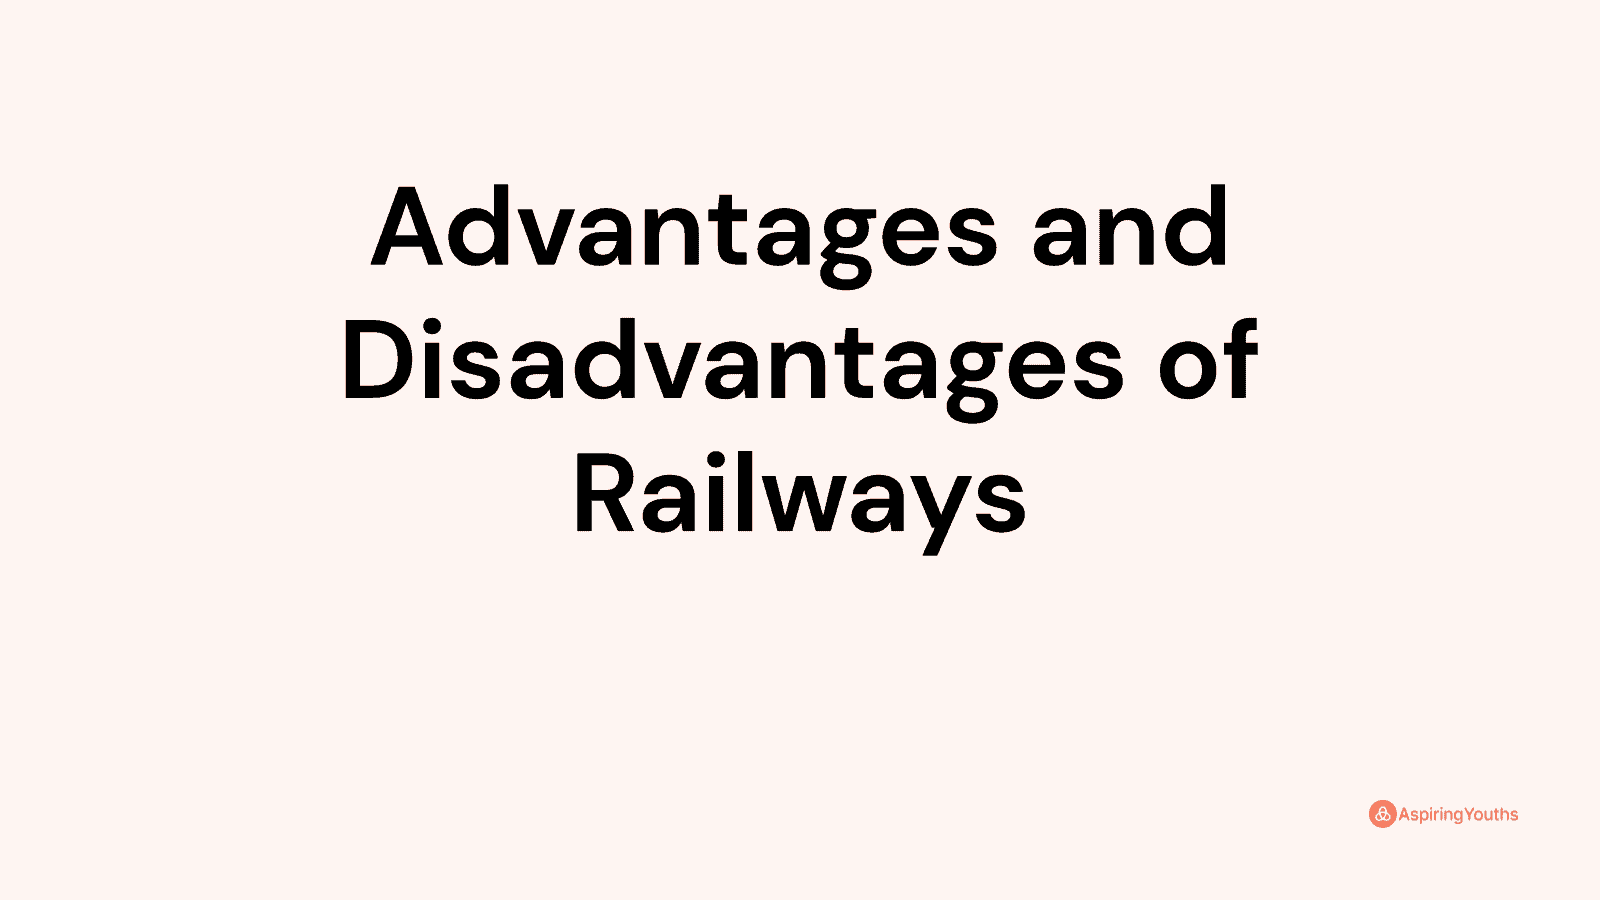 Advantages and disadvantages of Railways